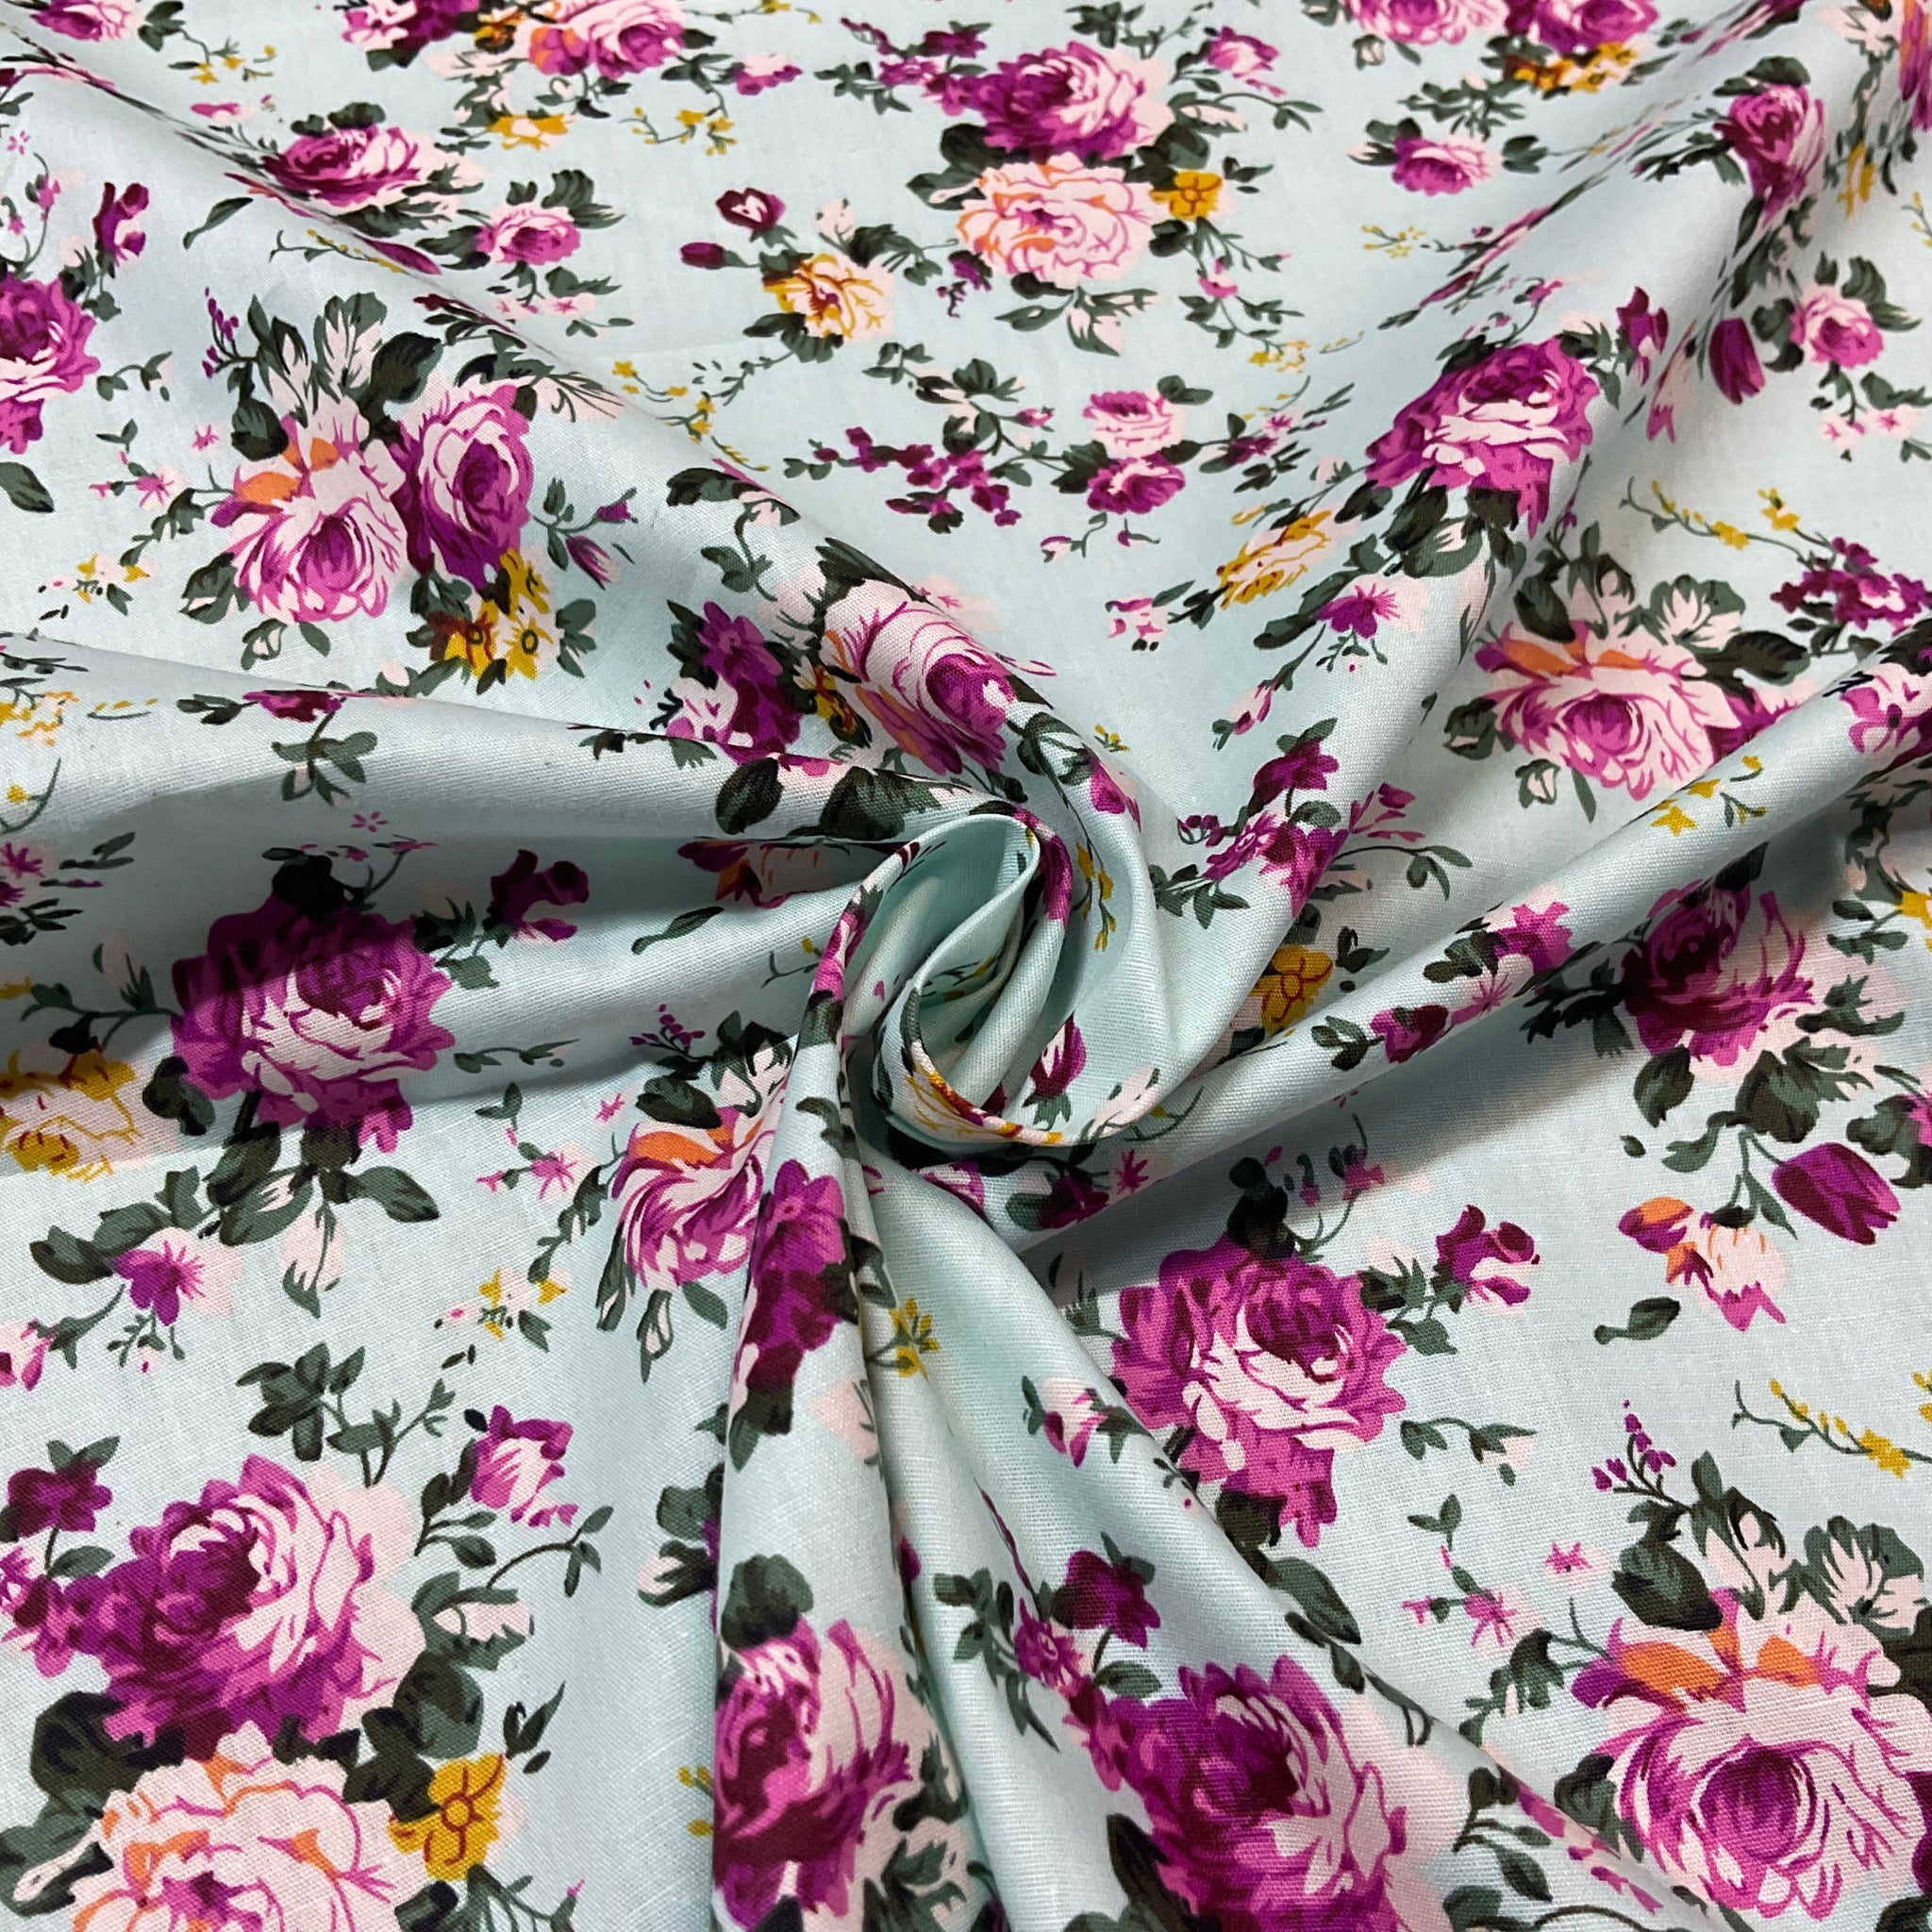 Vintage Floral 100% cotton printed dress craft fabric 150cm wide